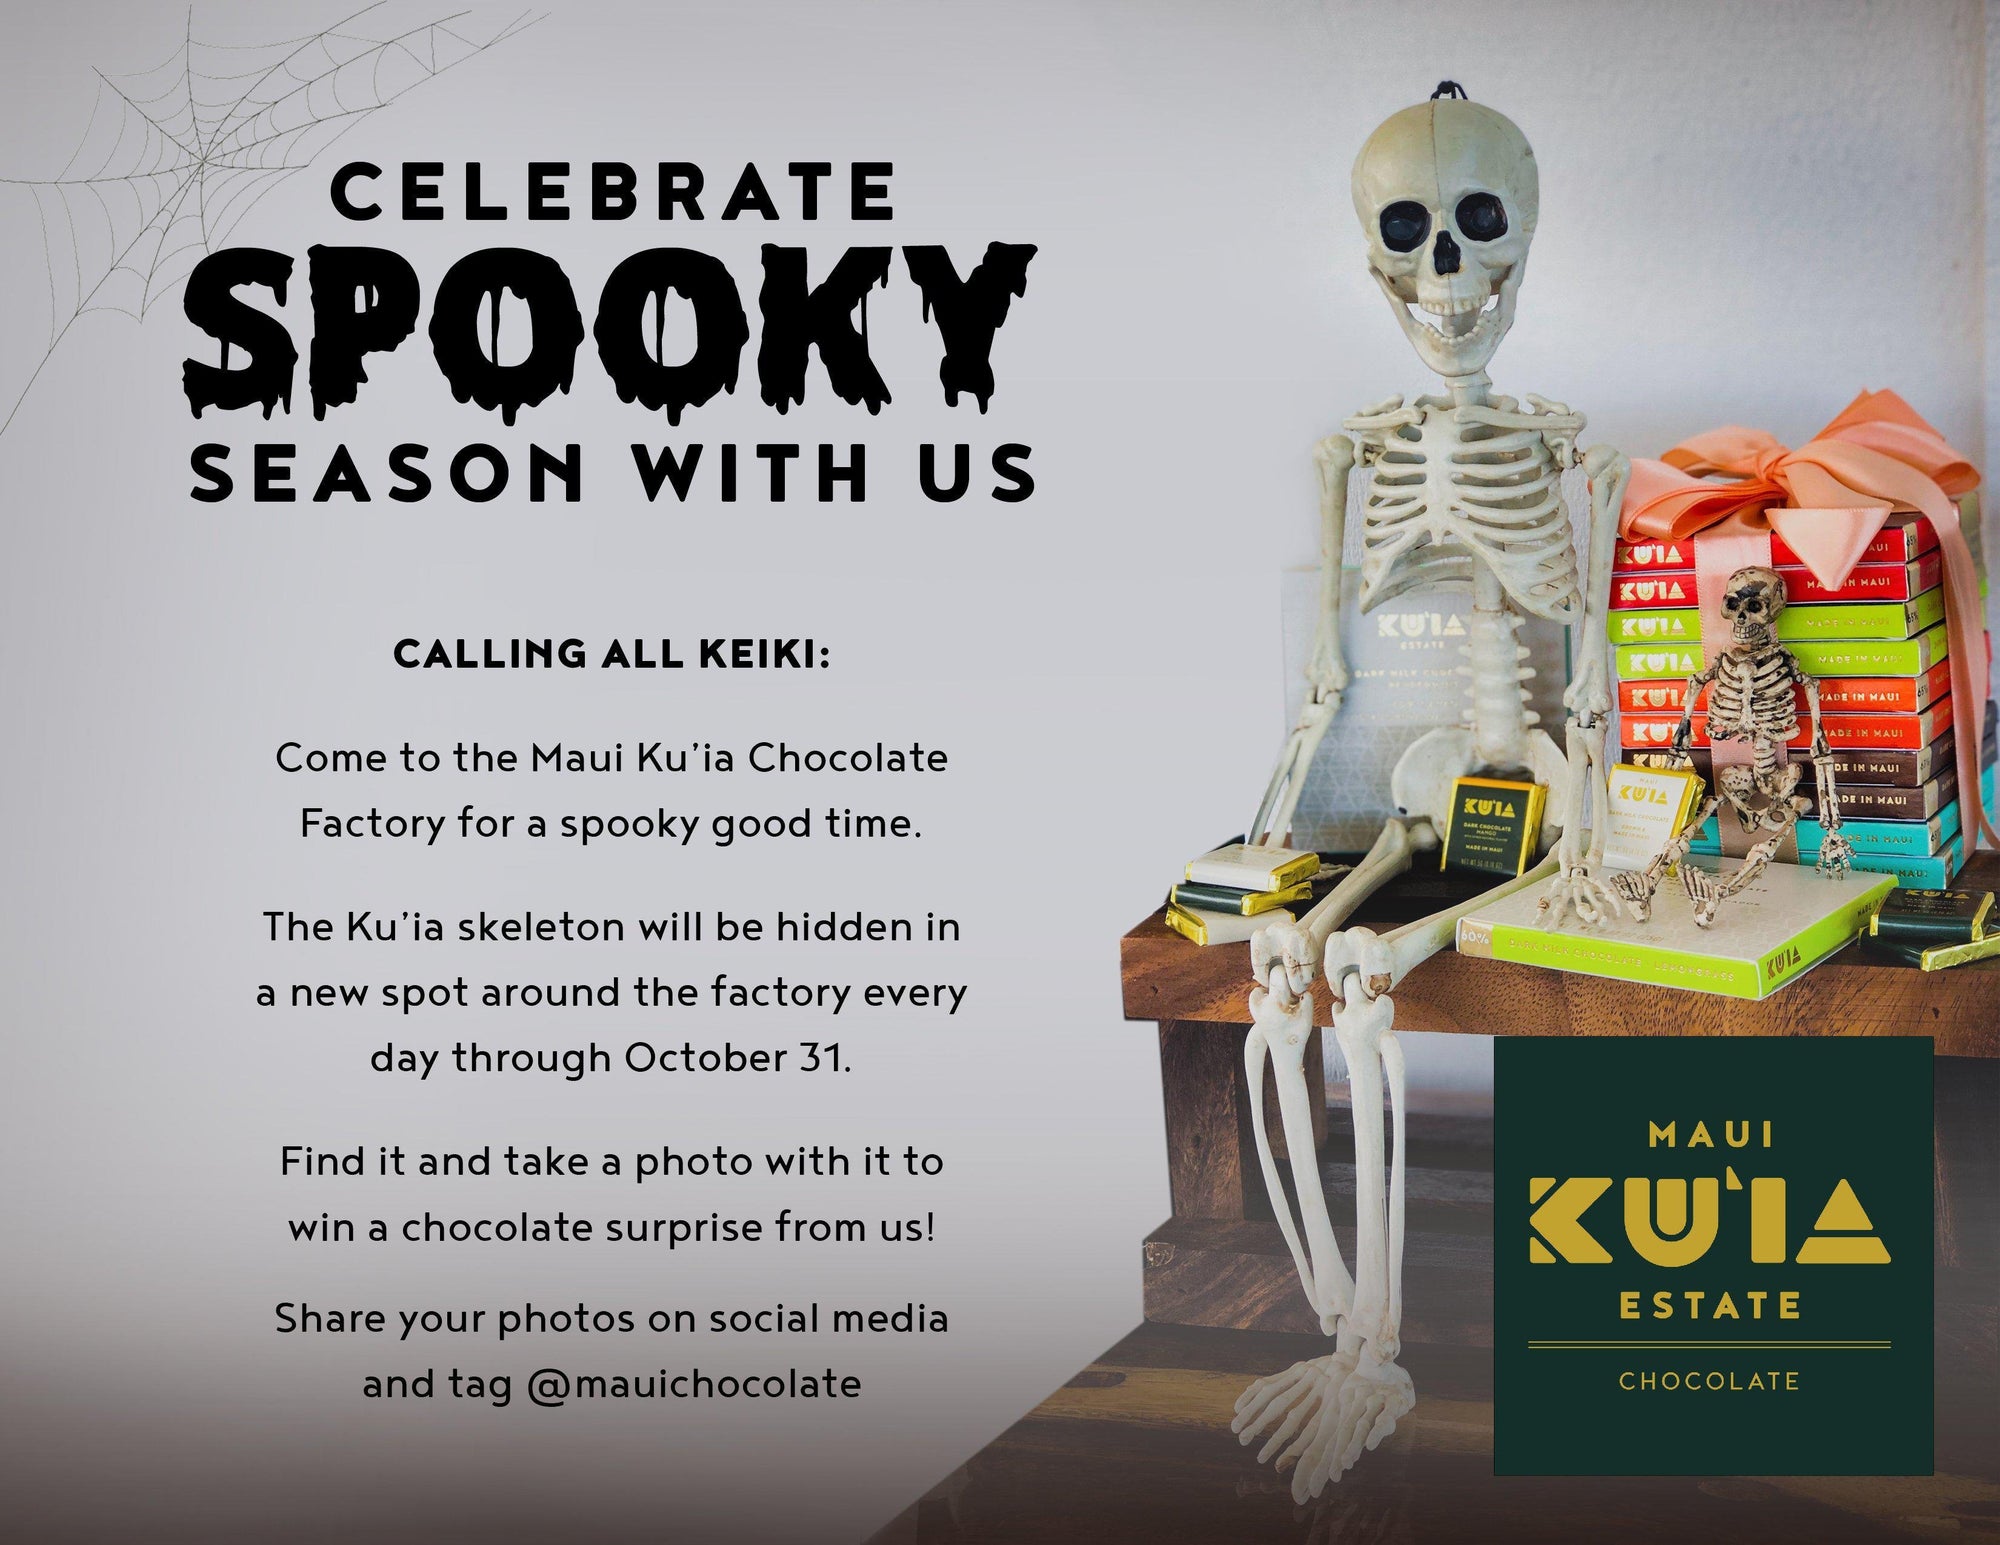 It's Spooky Season at the Chocolate Factory!-Maui Kuʻia Estate Chocolate